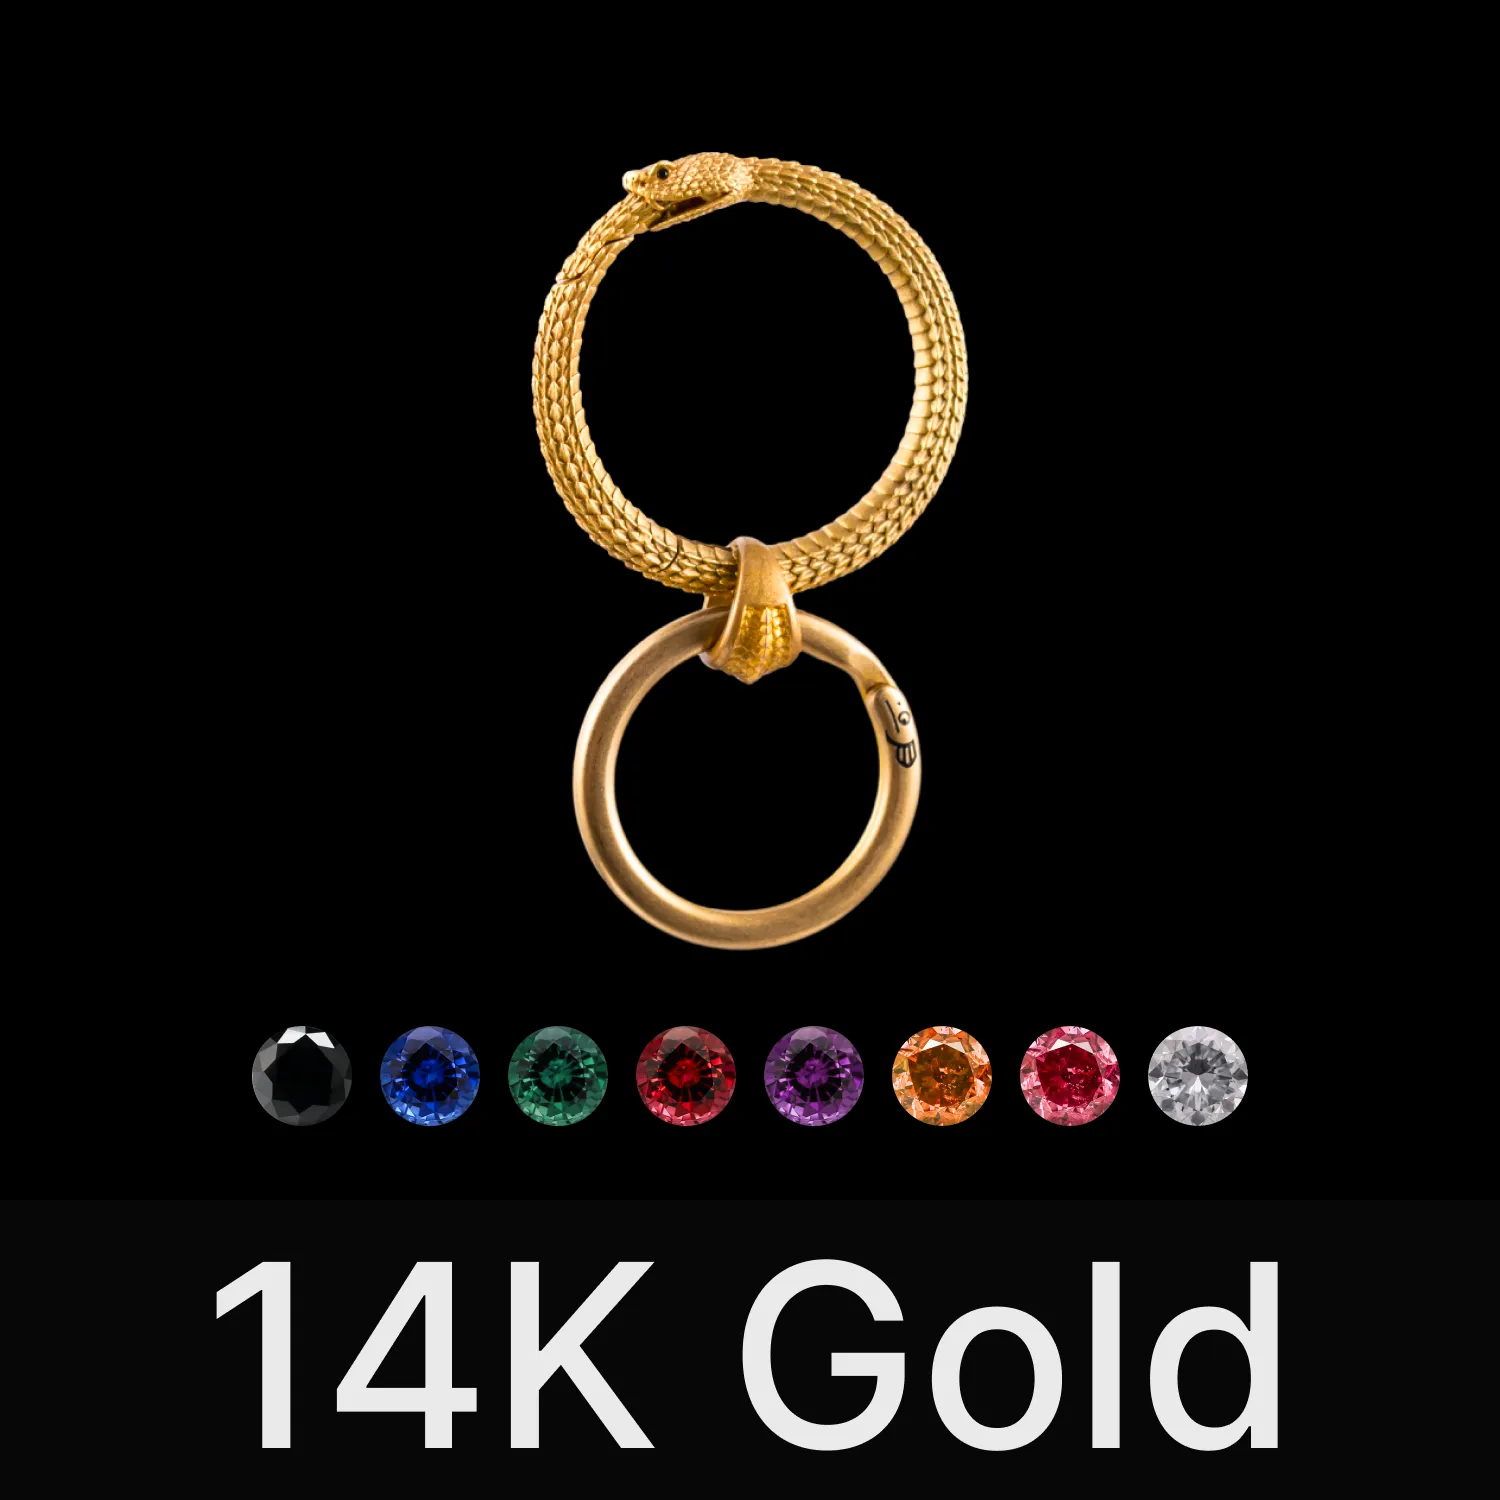 Ouroboros Keychain 14K Gold & Gemstone